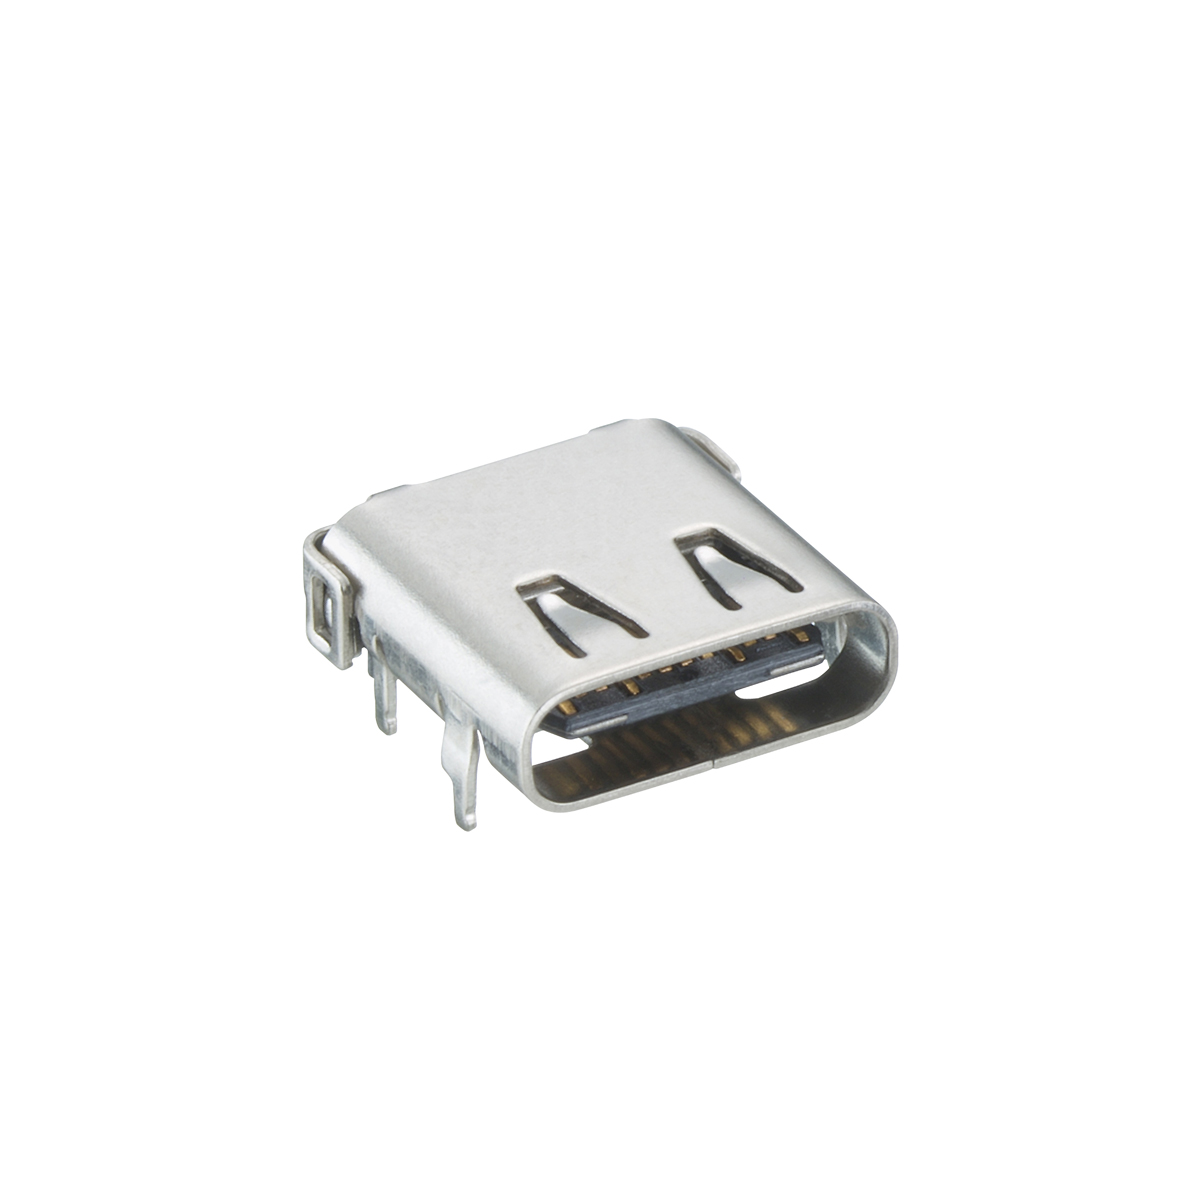 Lumberg: 2436 02 (Series 24 | USB and IEEE 1394 connectors)